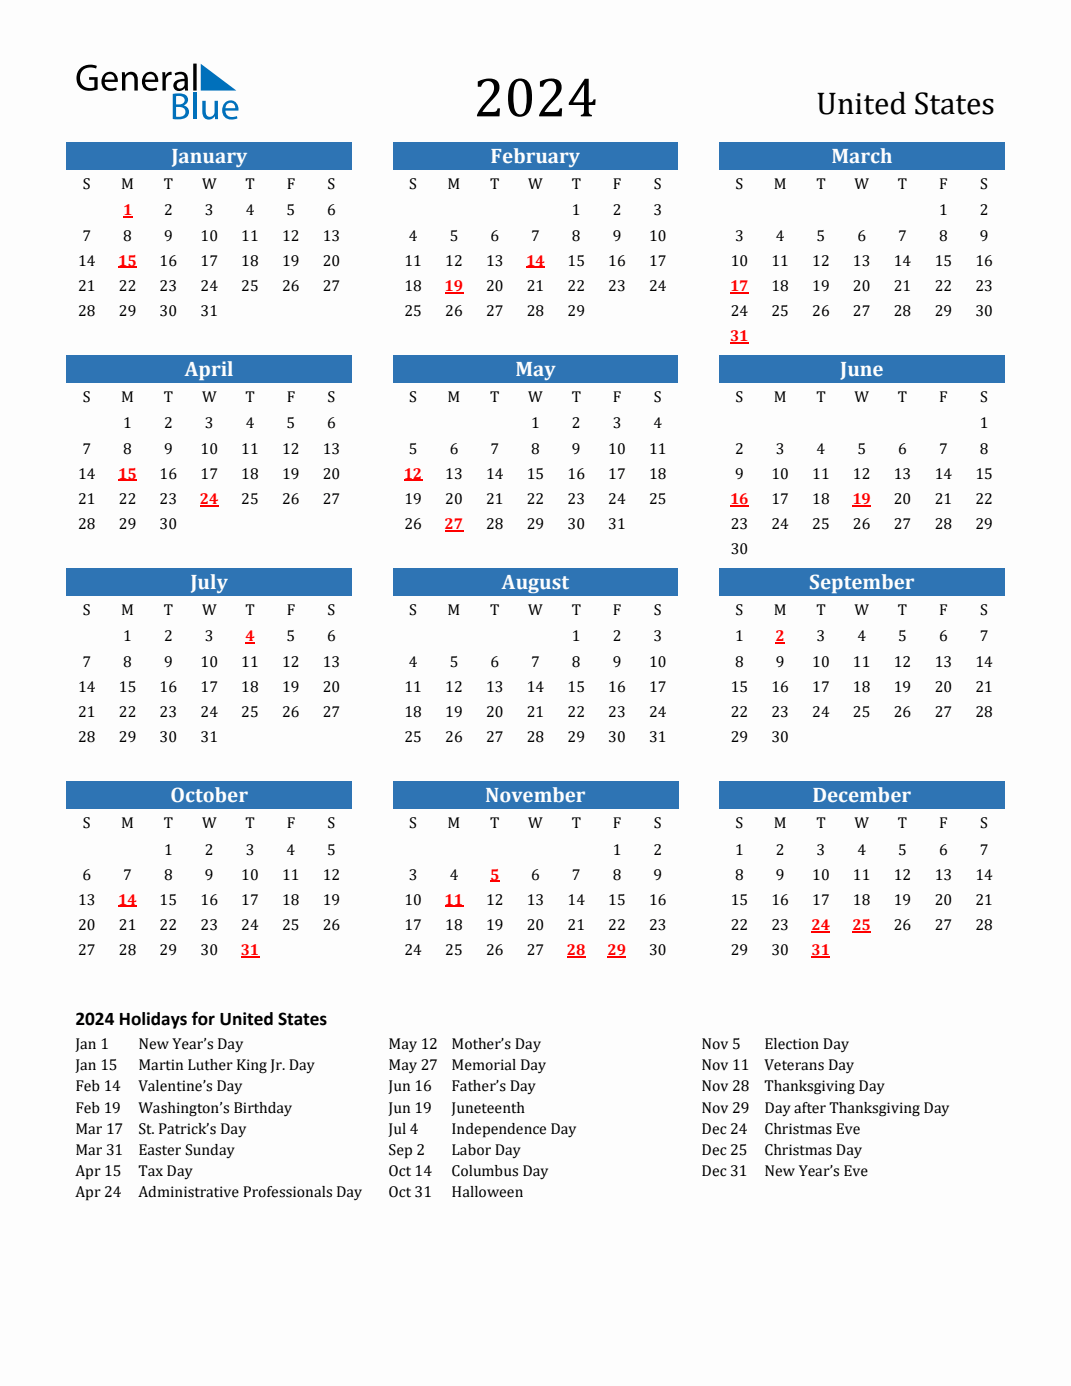 2024 Summer Calendar Dates United States Mail January 2024 Calendar